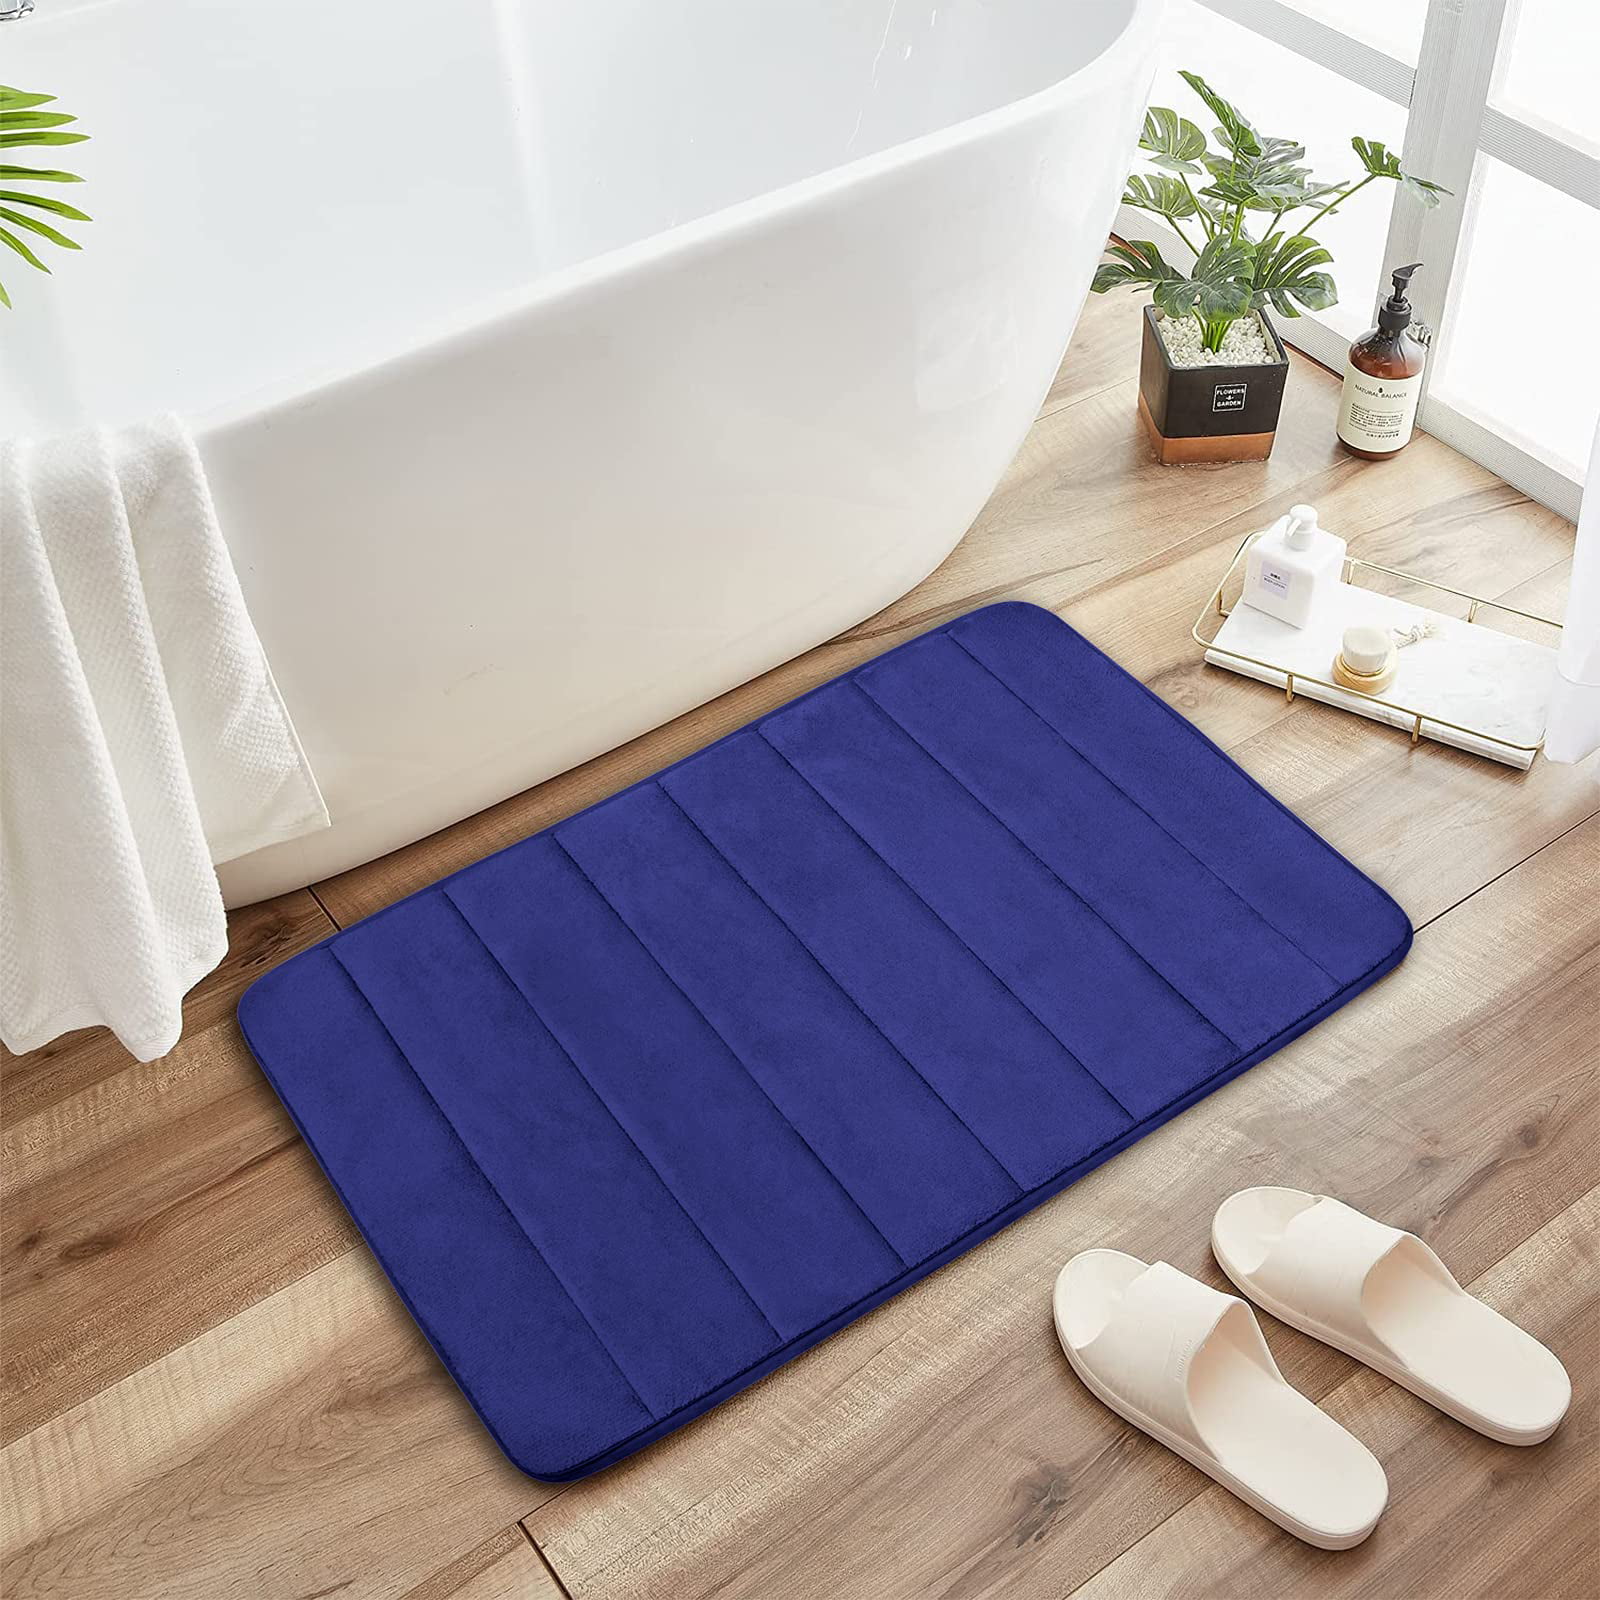 Absorbent Non-slip Memory Foam Soft Bathroom Bedroom Bath Mat Floor Rug Carpet 